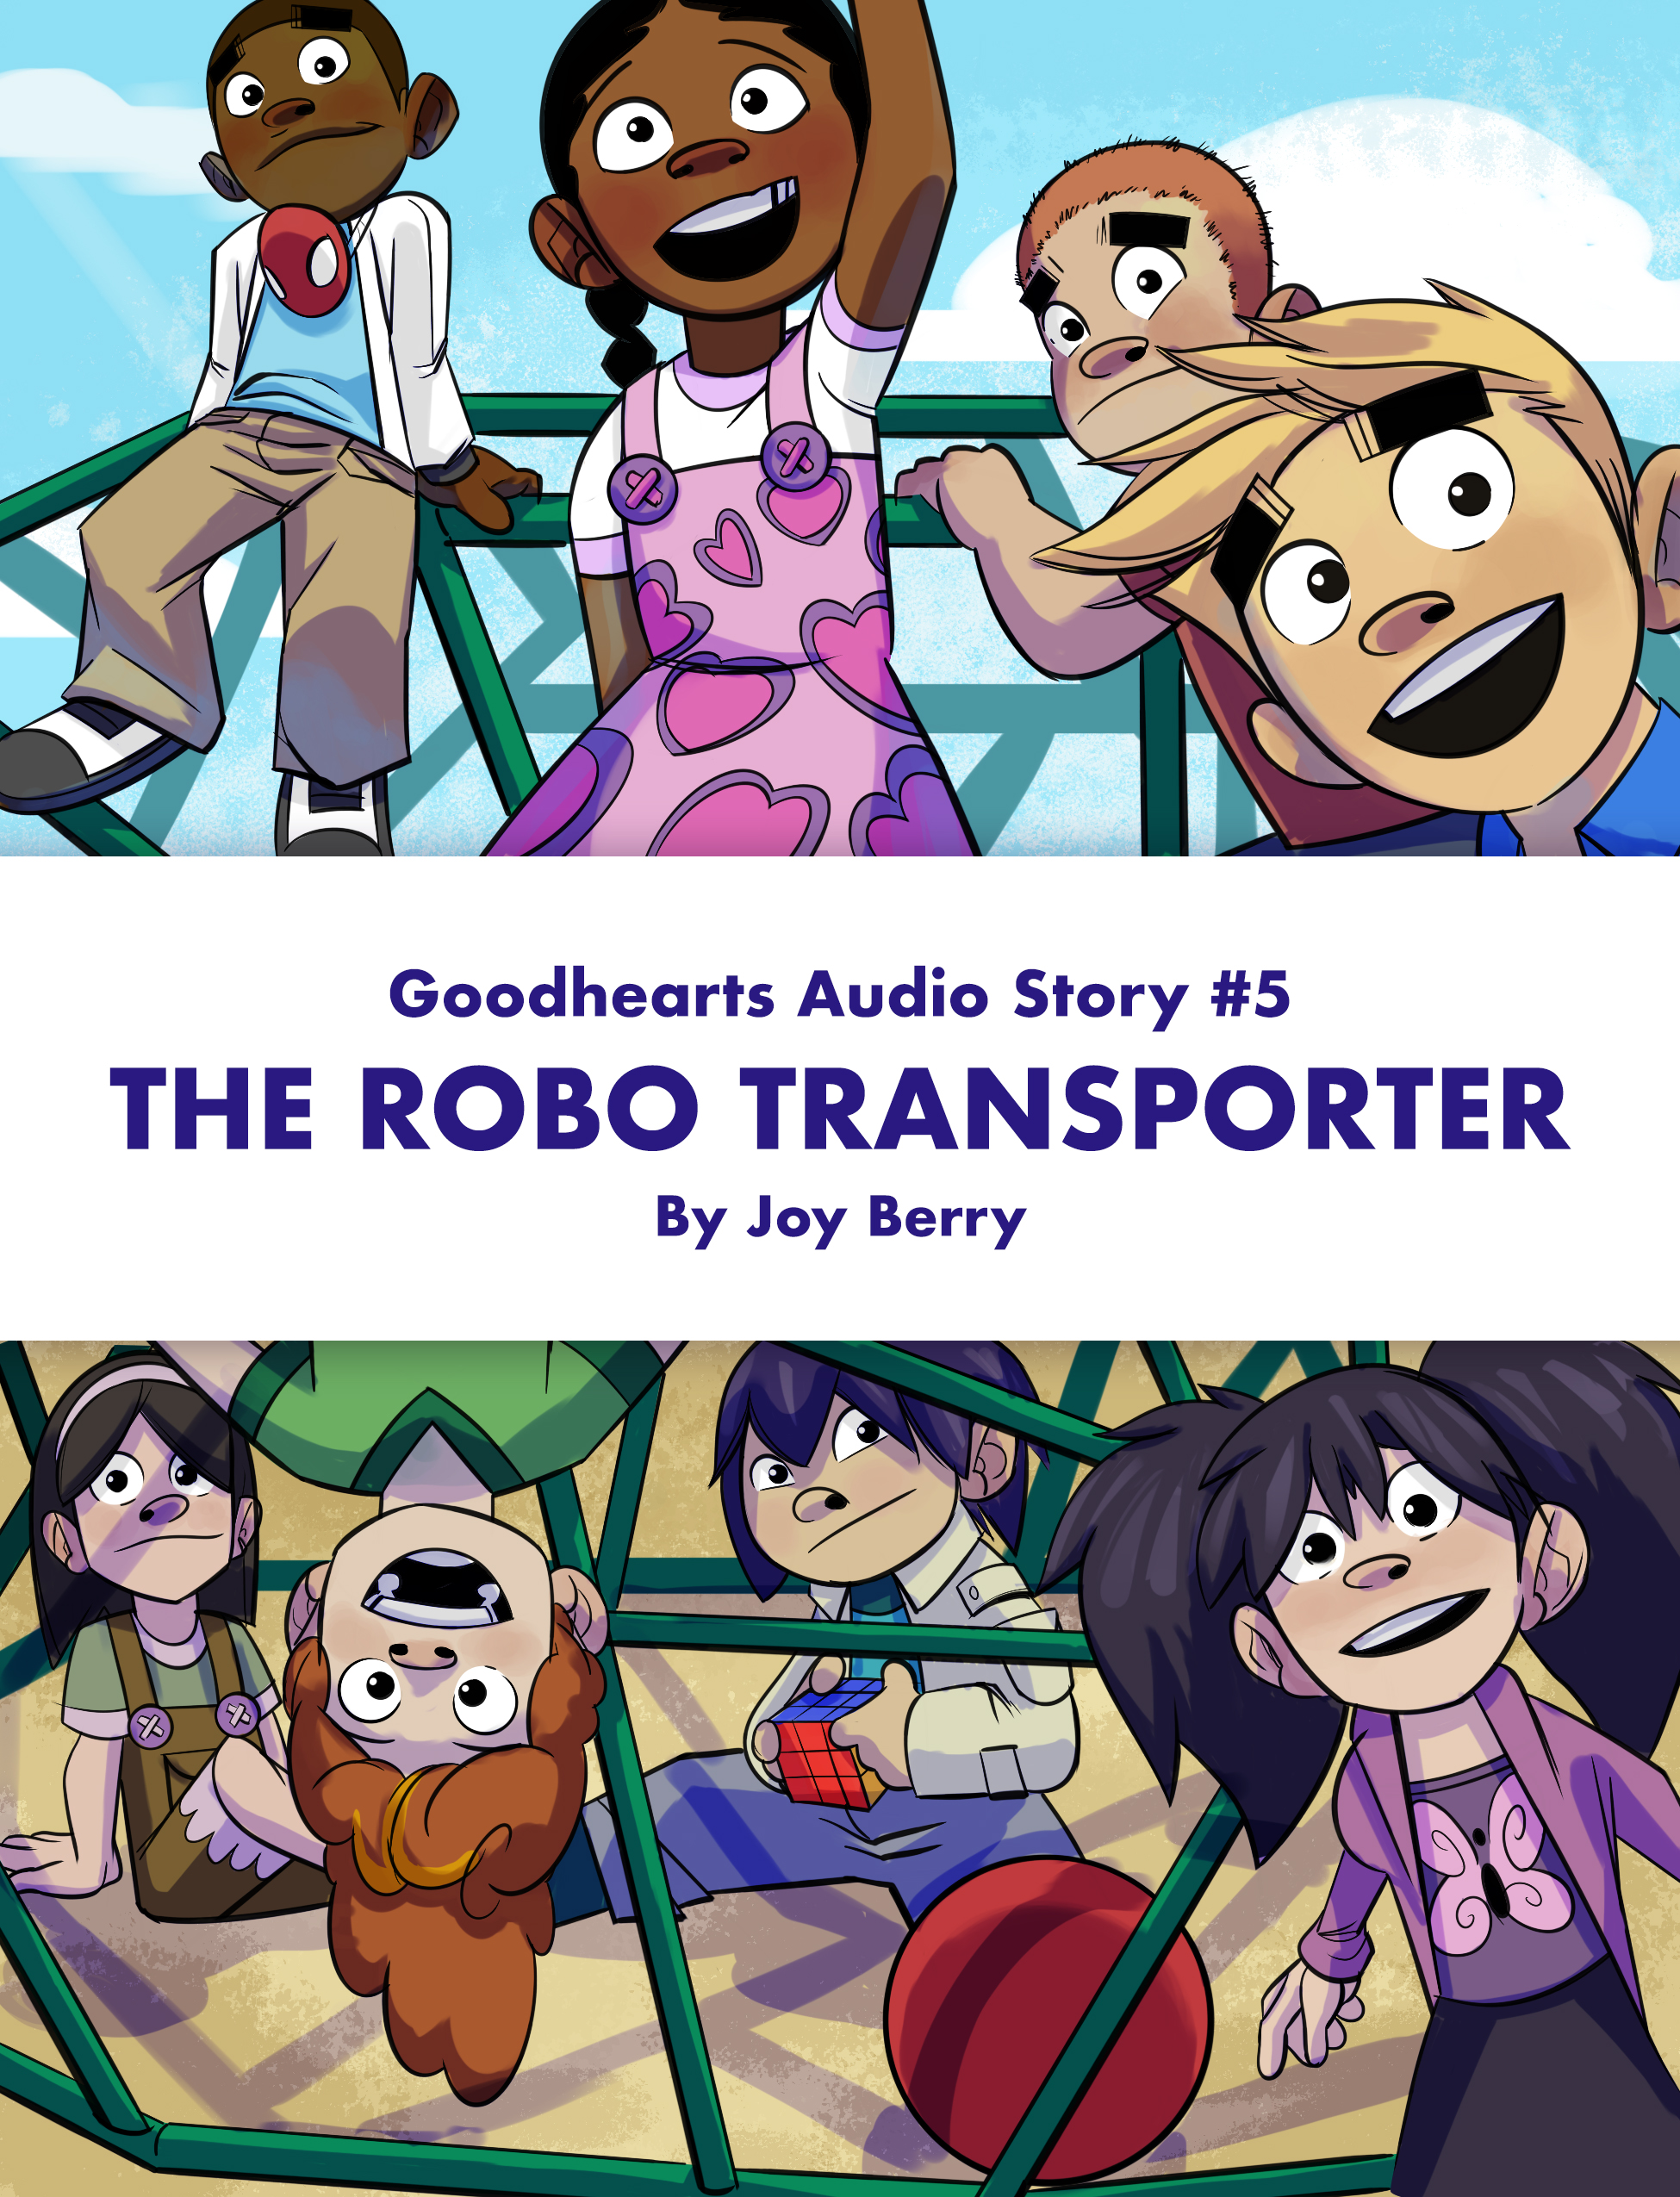 The Robo Transporter